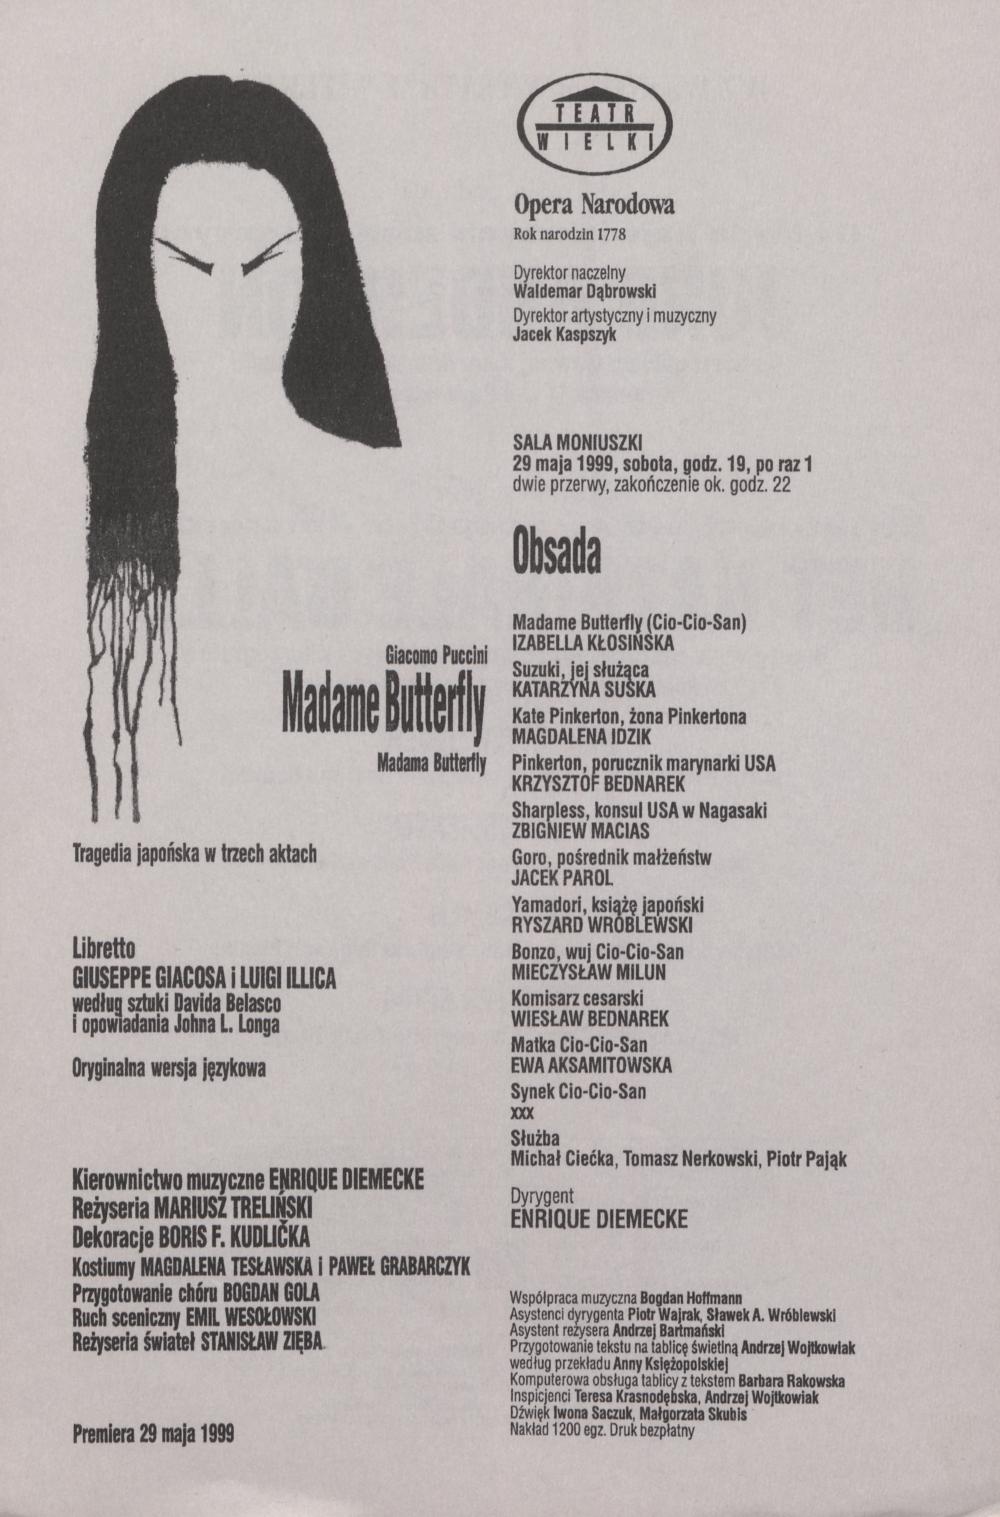 Wkładka obsadowa „Madame Butterfly” Giacomo Puccini 29-05-1999